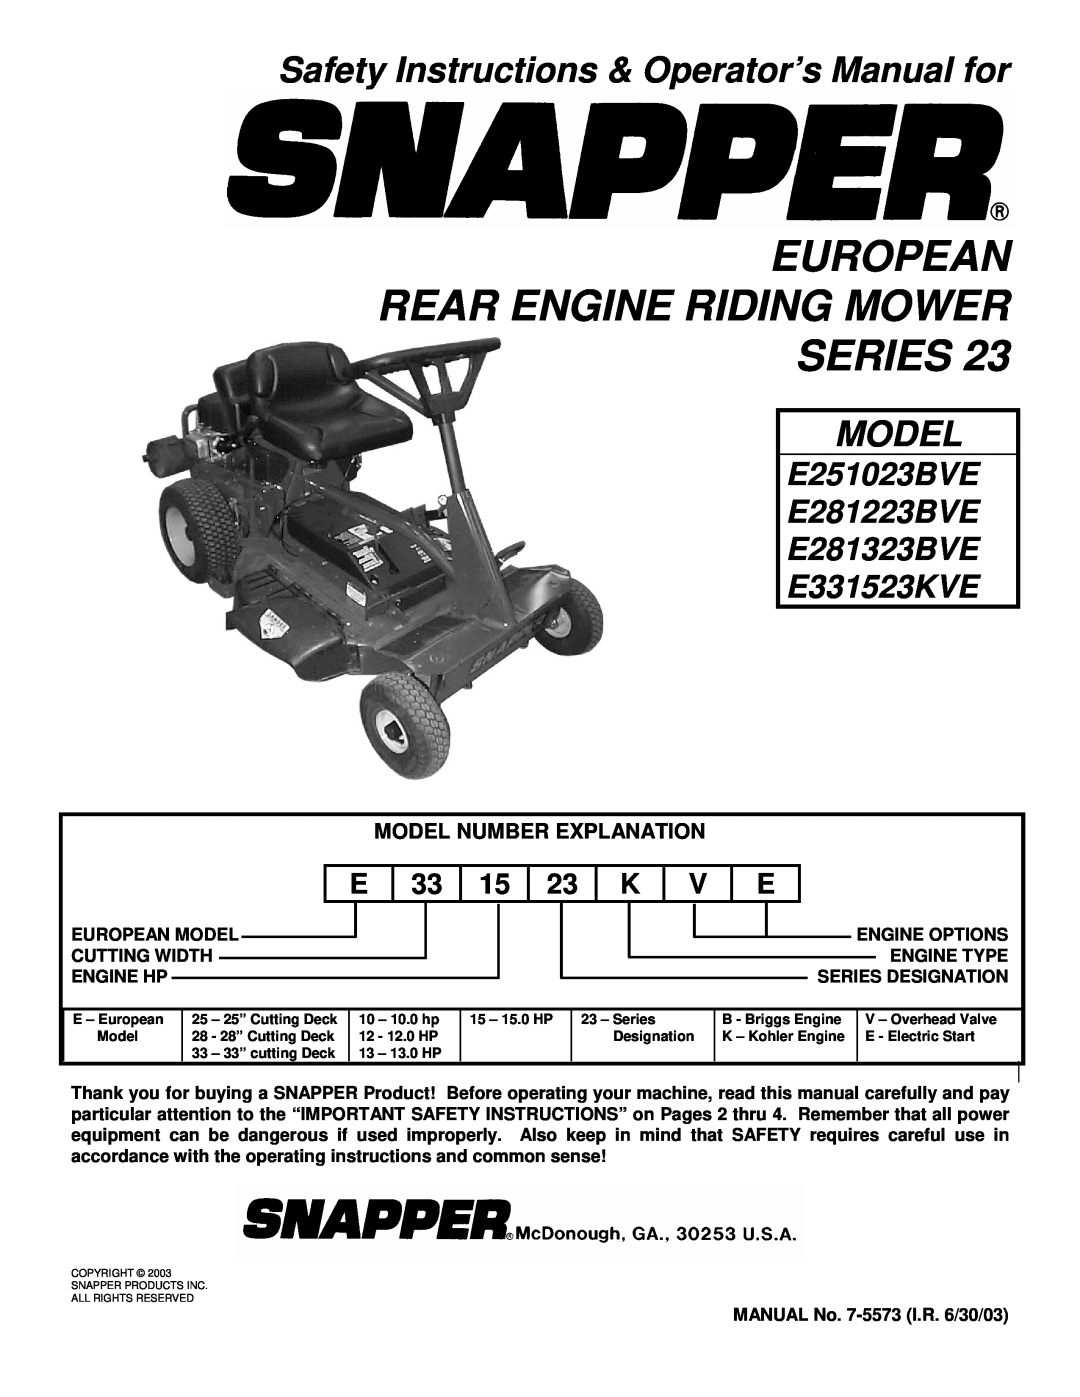 Snapper E281323BVE, E251023BVE, E281223BVE, E331523KVE important safety instructions Model Number Explanation 